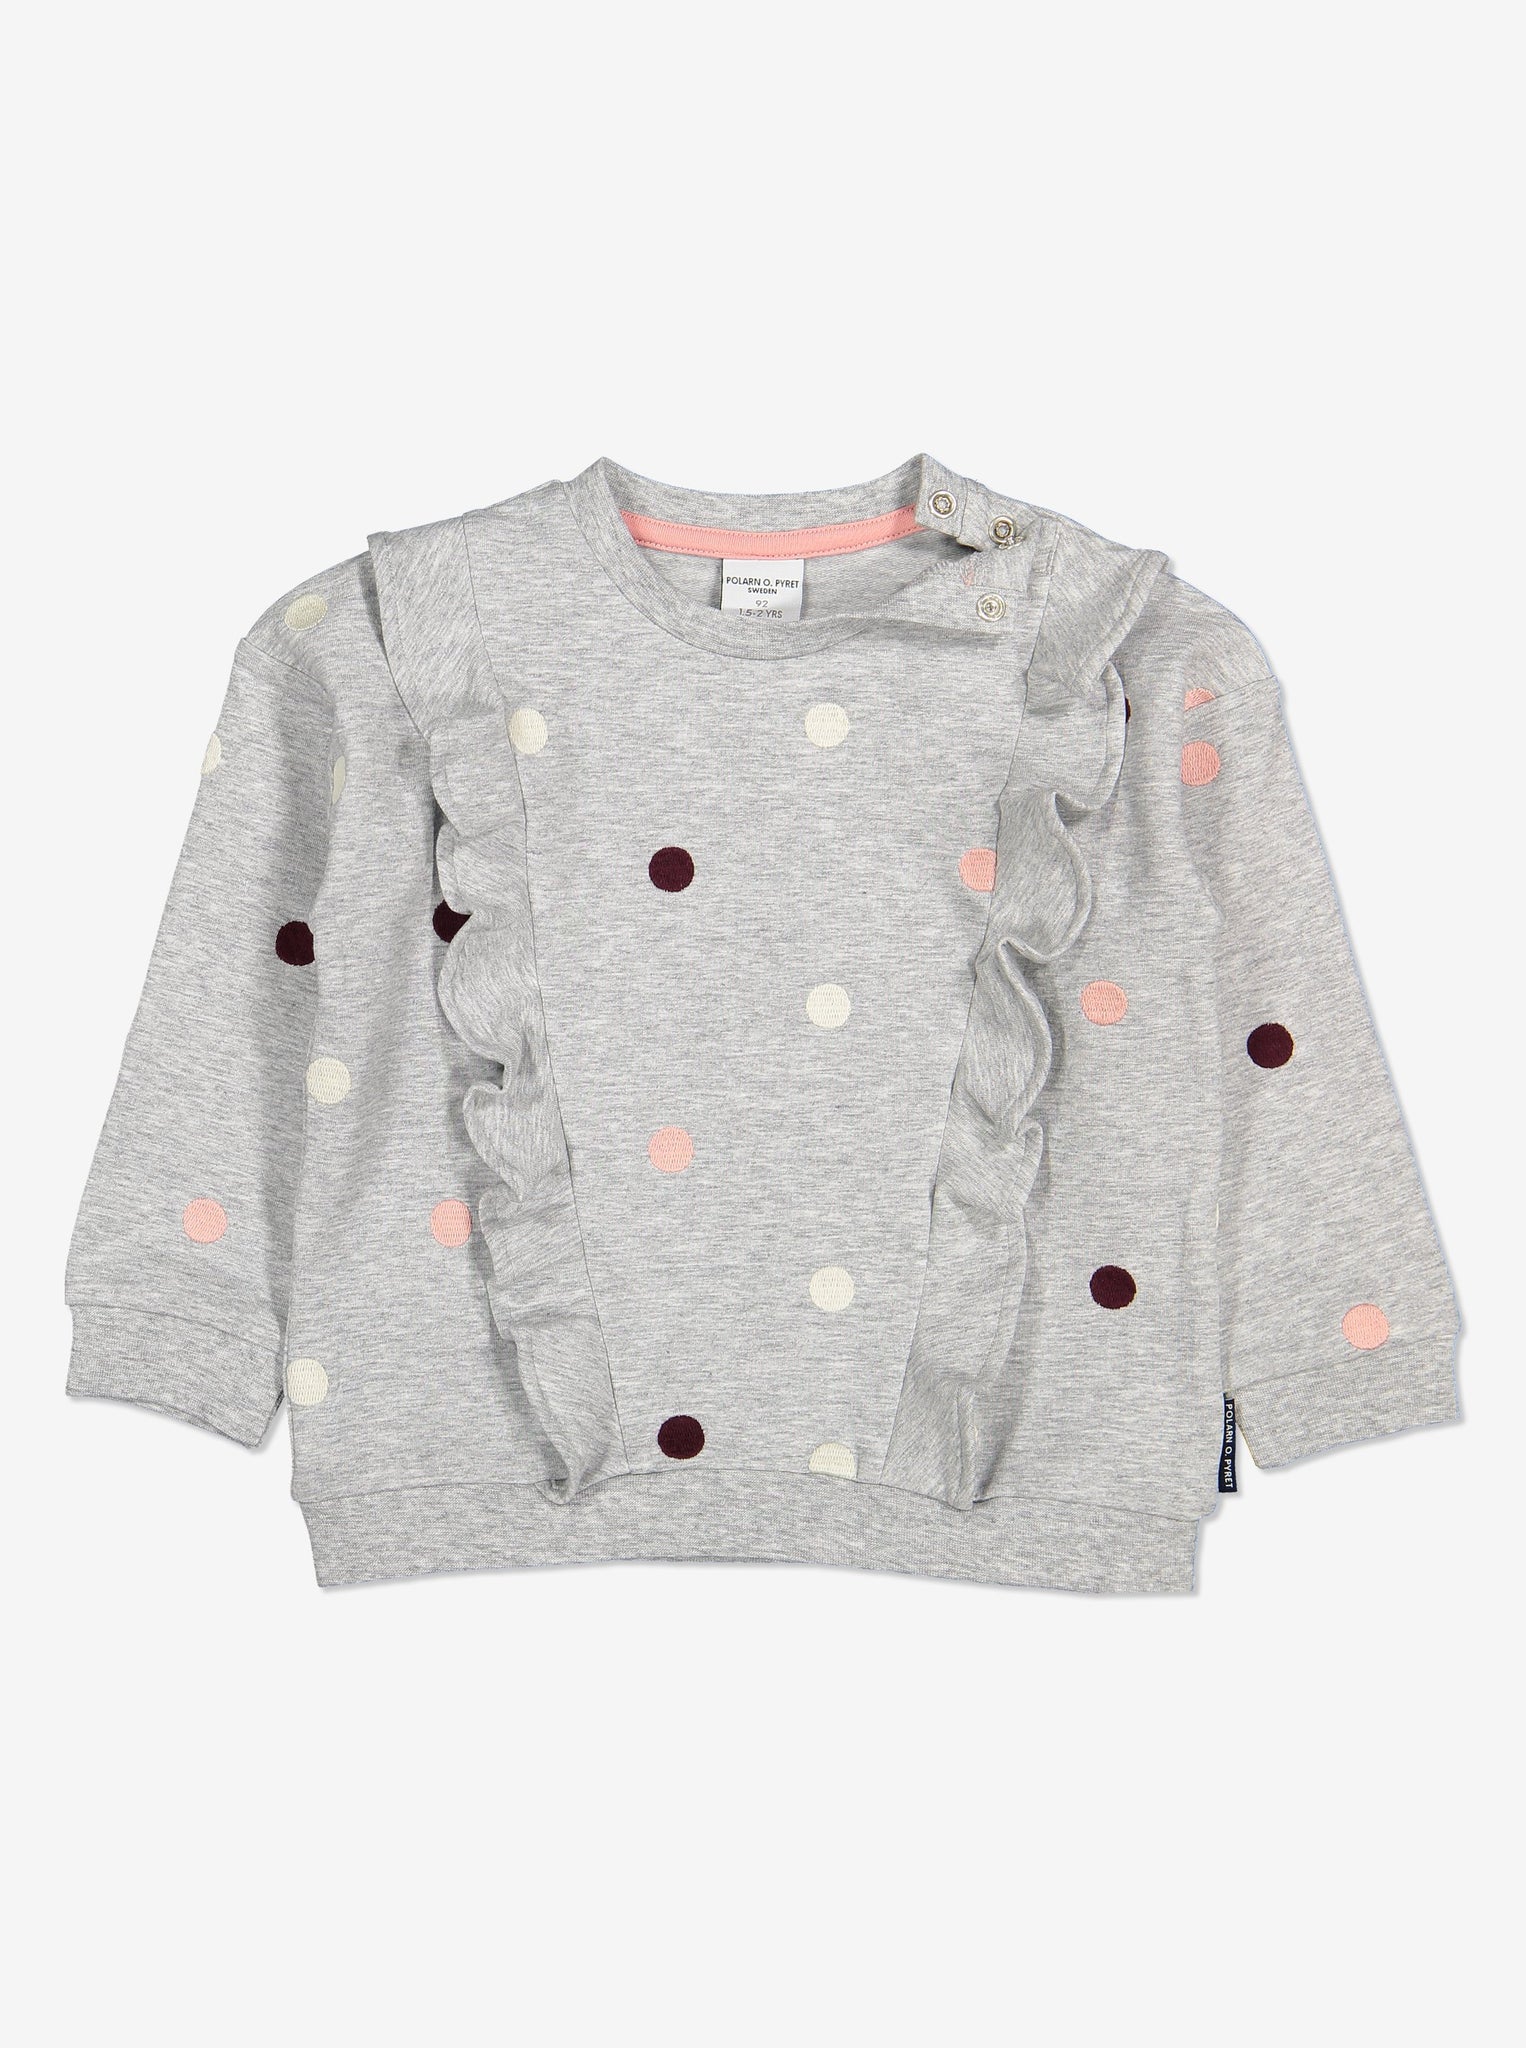 Polka Dot Kids Sweatshirt-Unisex-1-6y-Grey